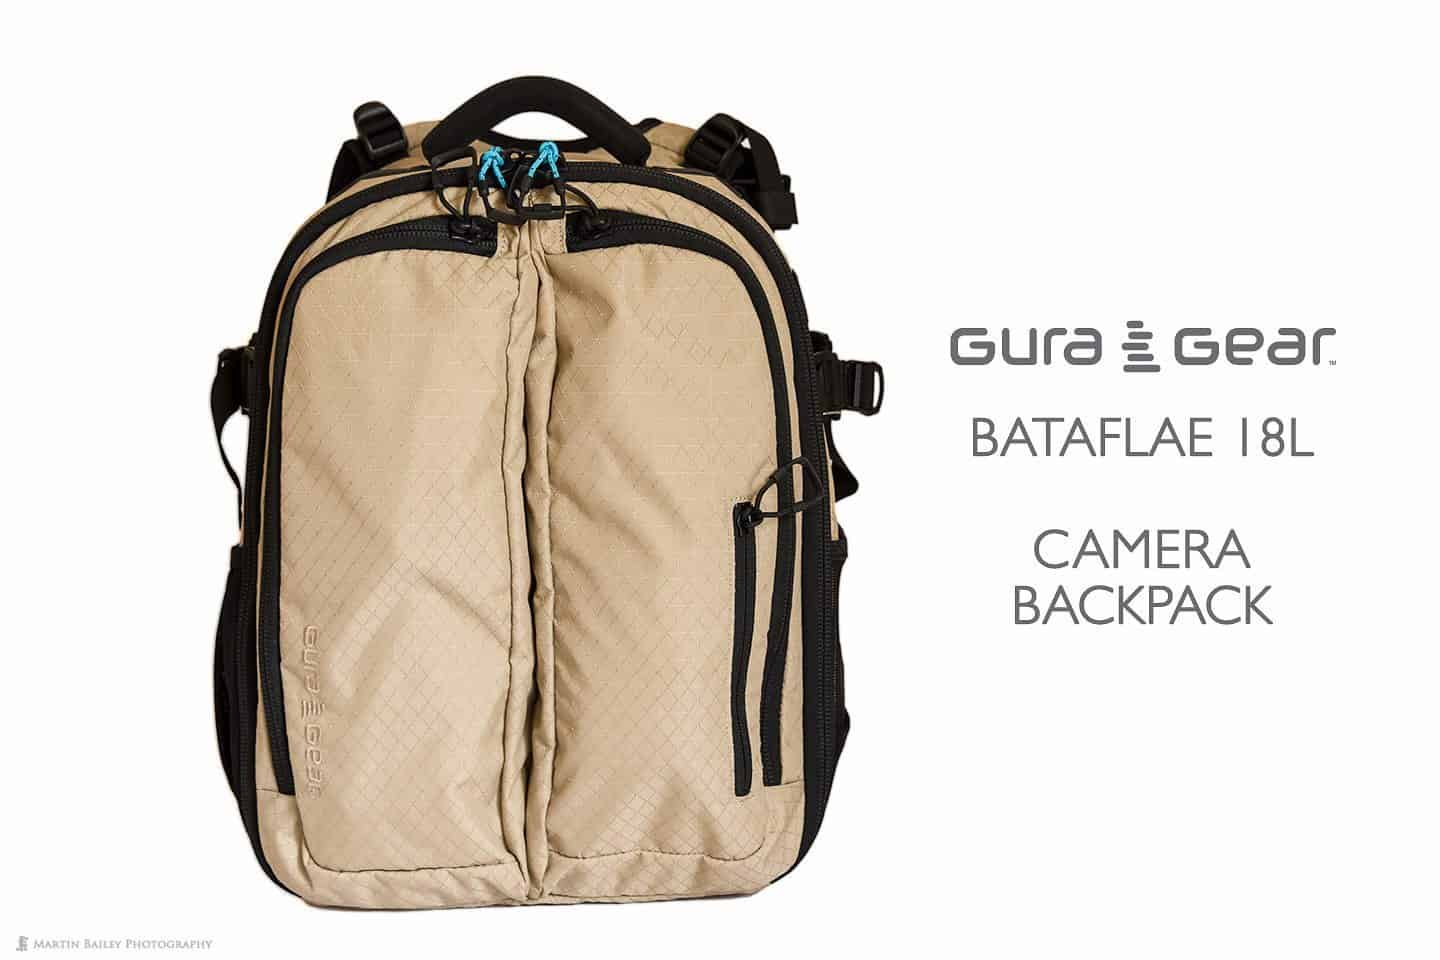 Gura Gear Bataflae 18L Camera Backpack Review (Podcast 482)